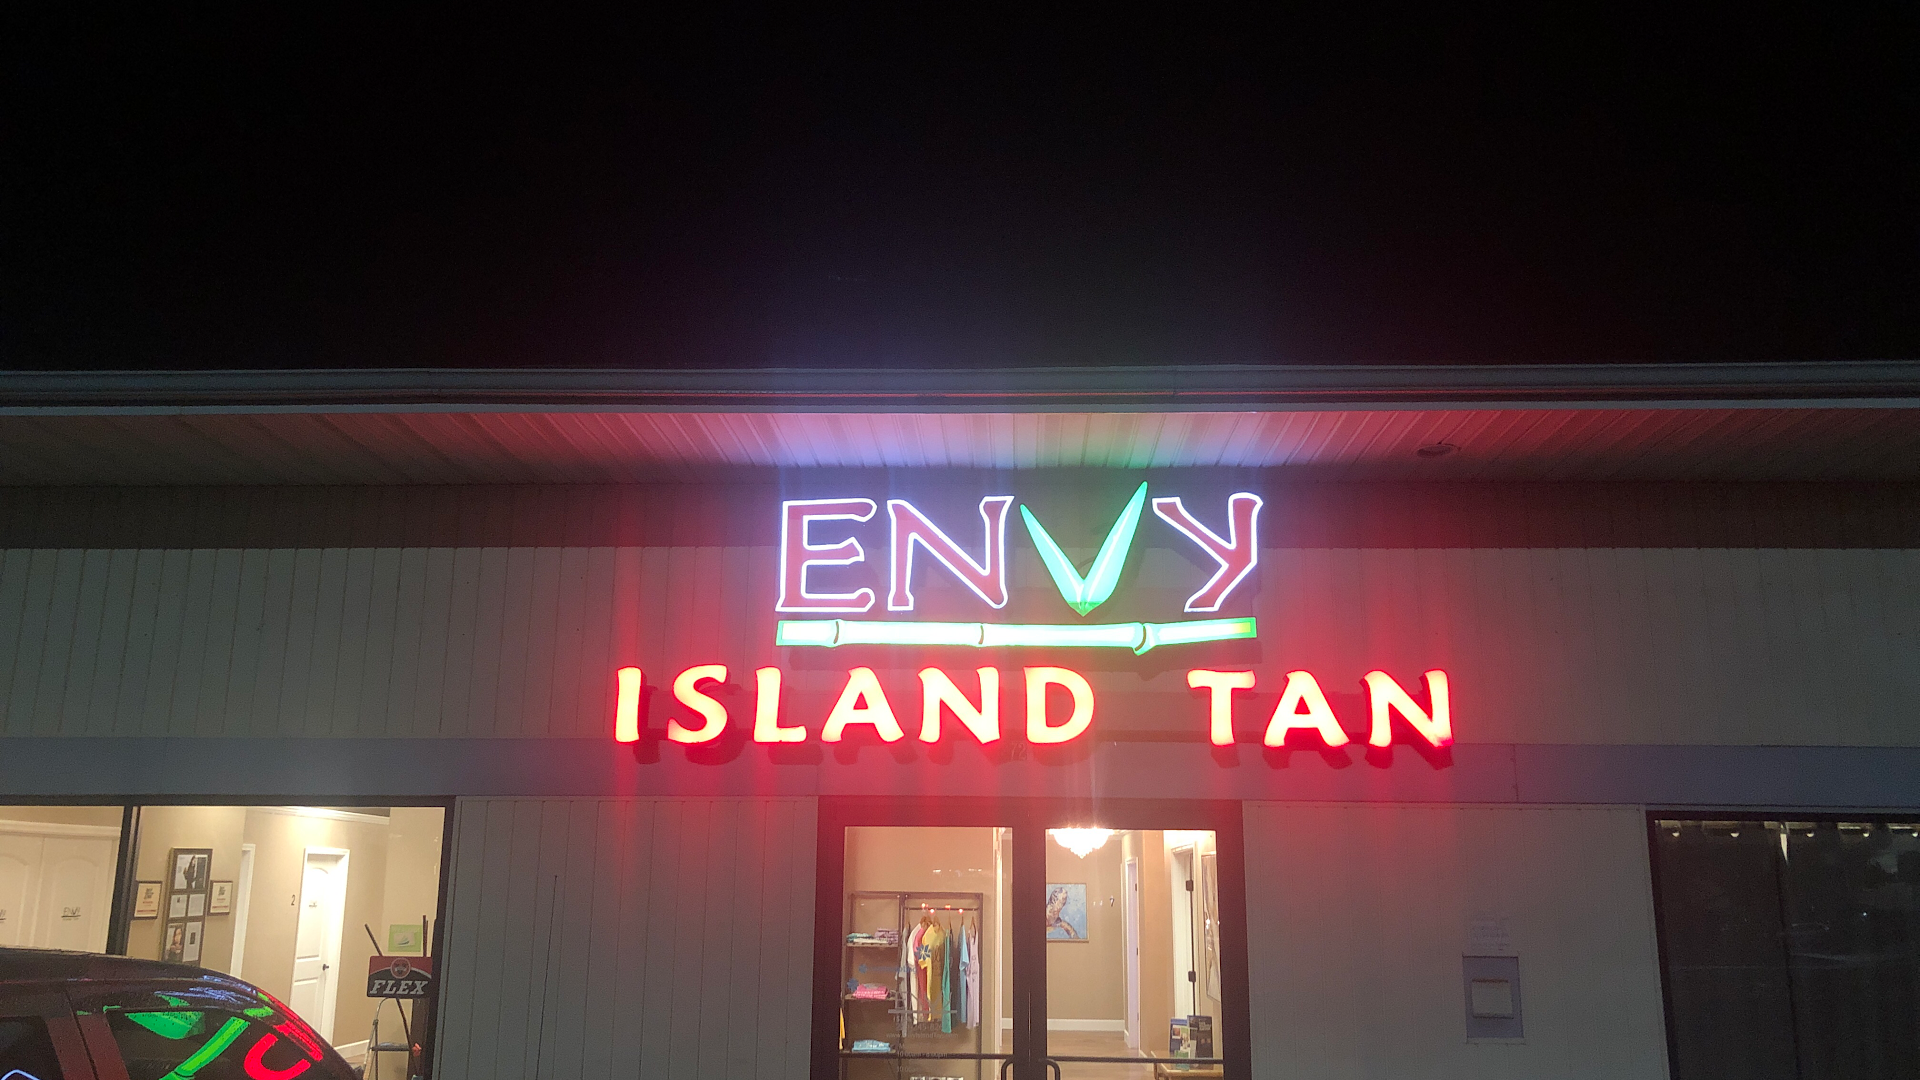 Envy Island Tan